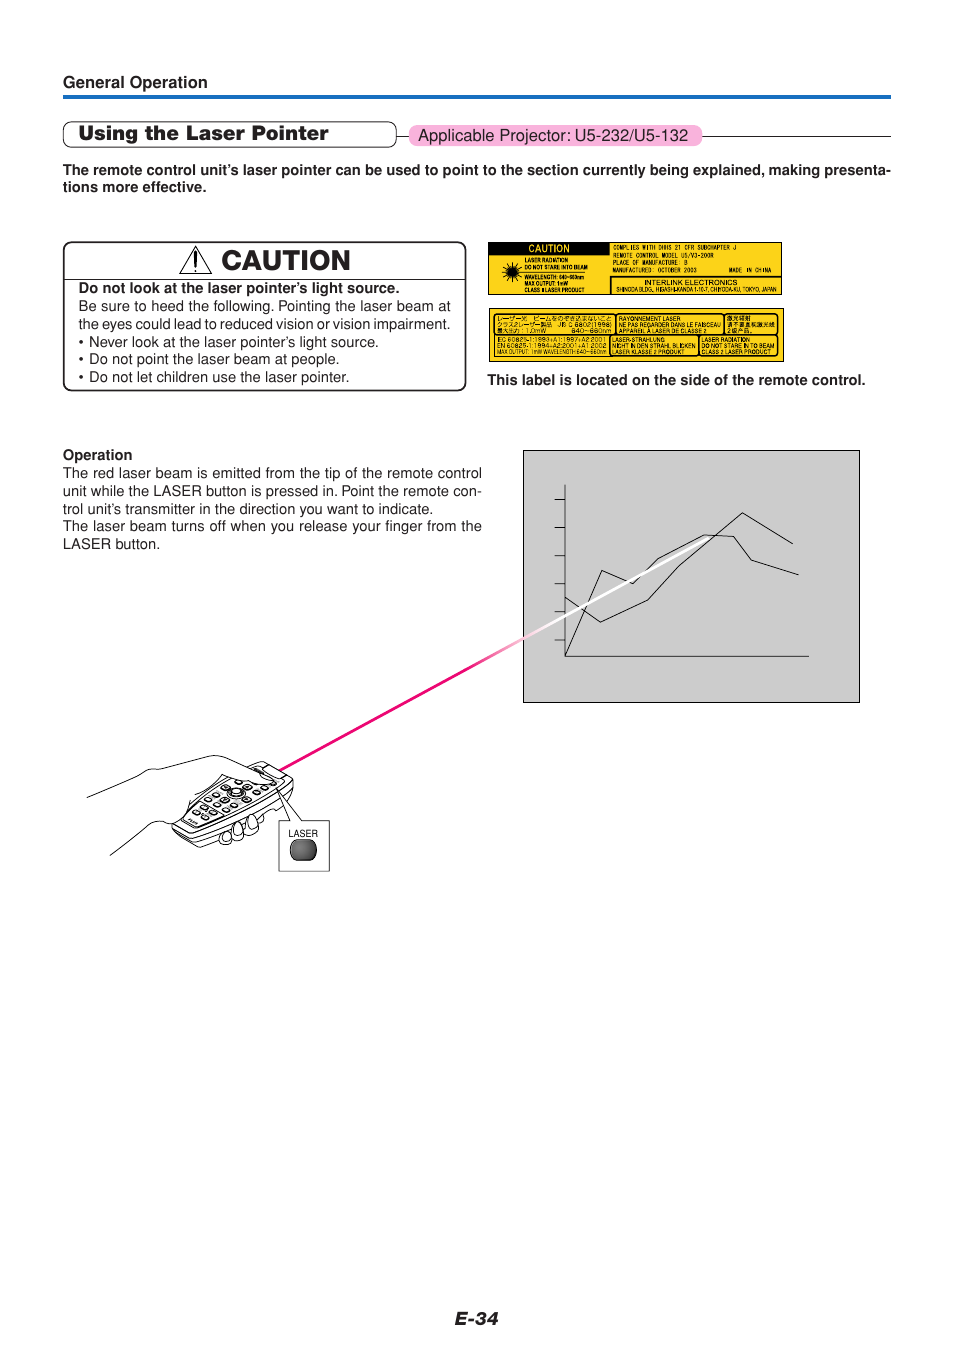 Using the laser pointer, Caution, E-34 | PLUS Vision U5-232 User Manual |  Page 35 / 72 | Original mode